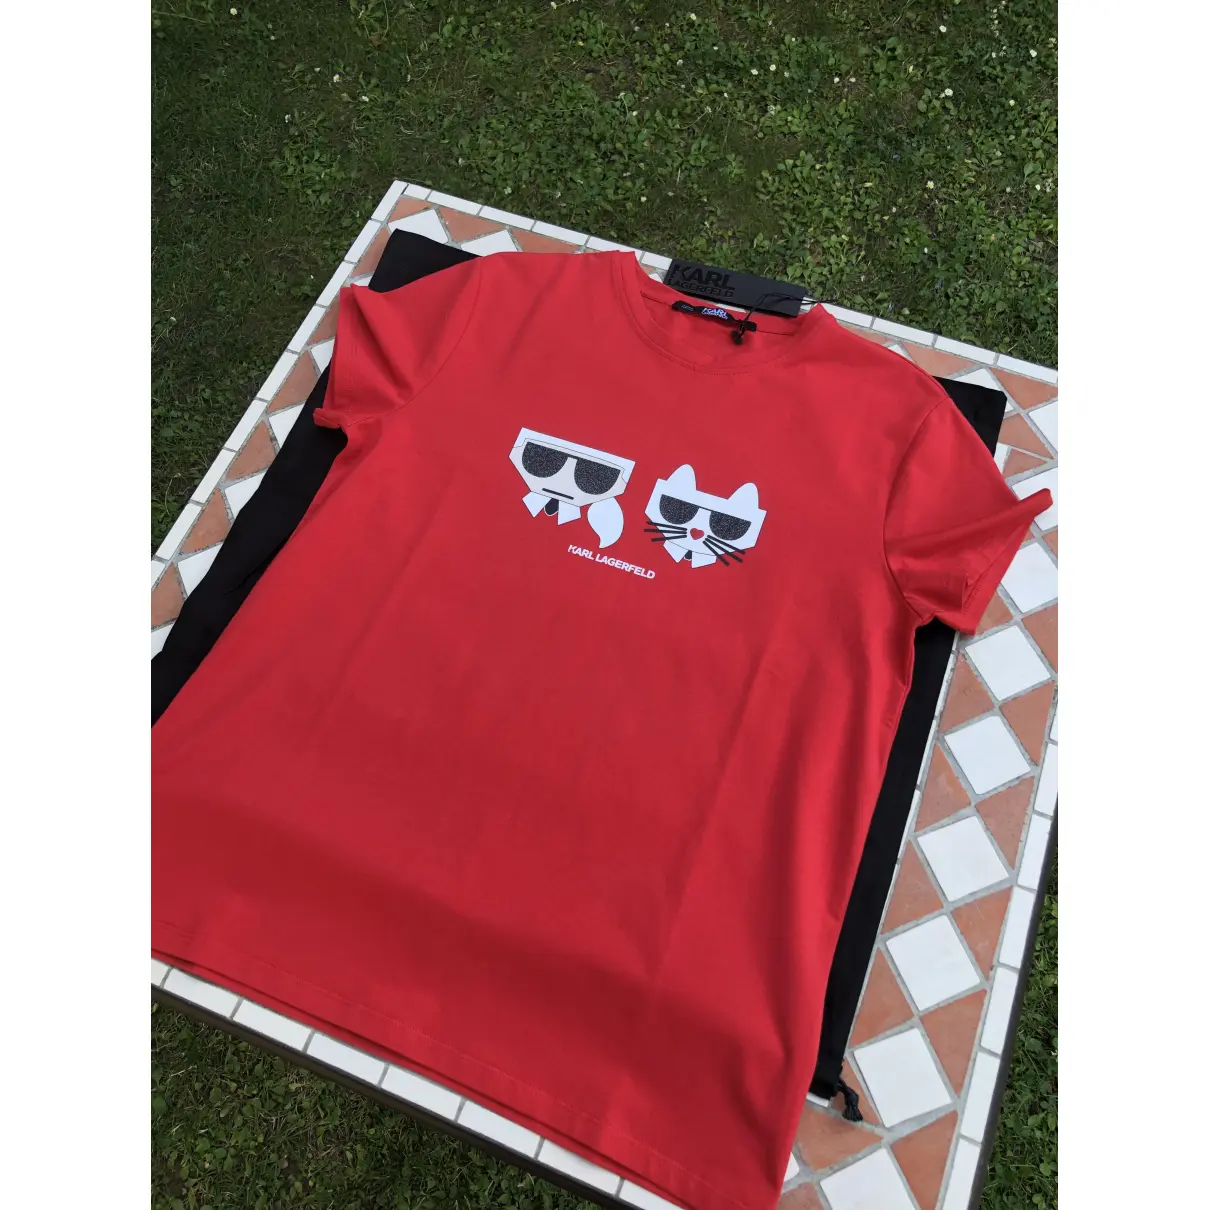 Buy Karl Red Cotton T-shirt online